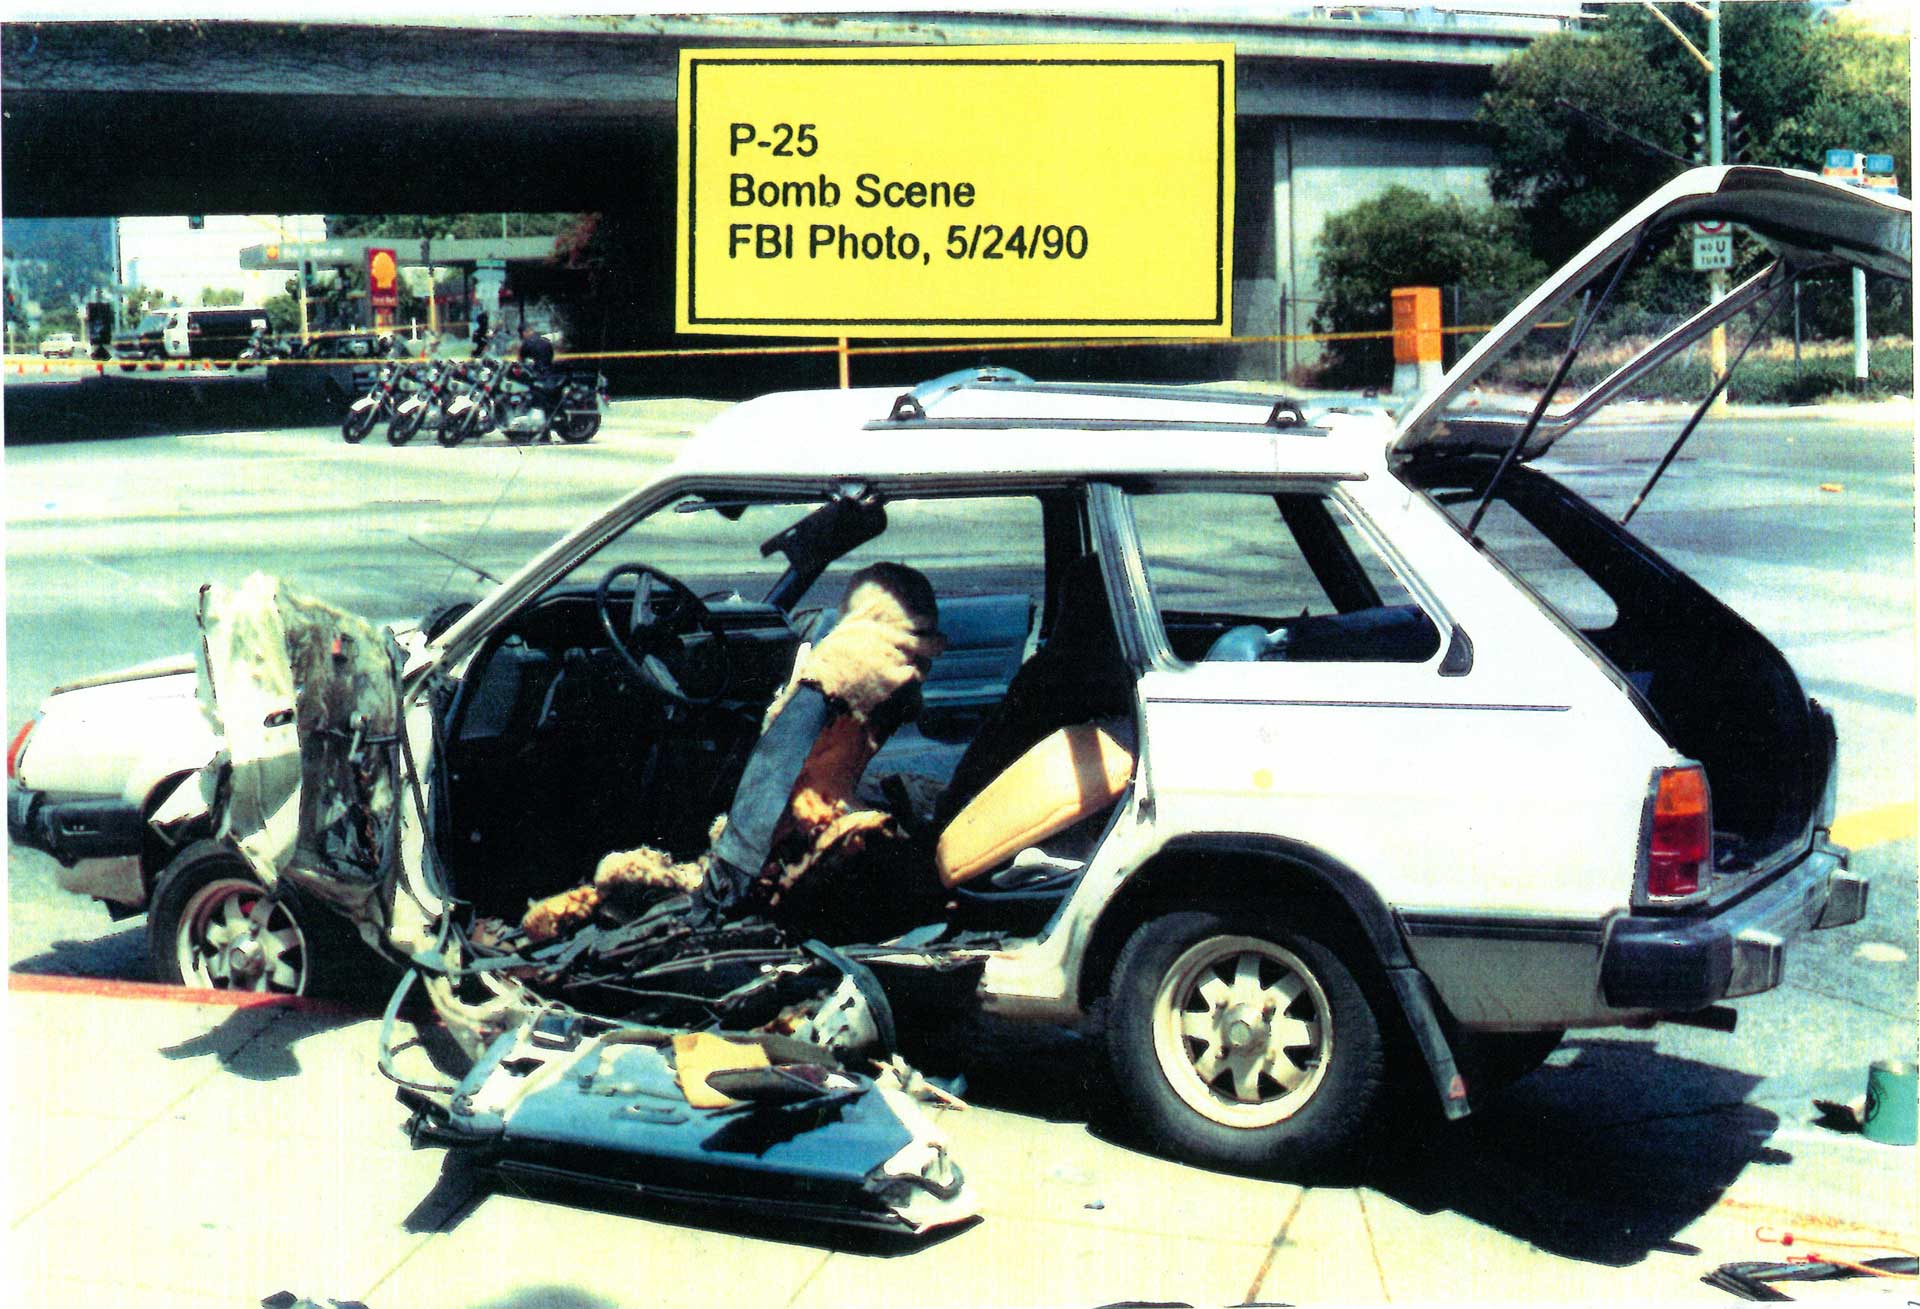 Judi Bari Bomb Scene - Whole Car | HowardZinn.org